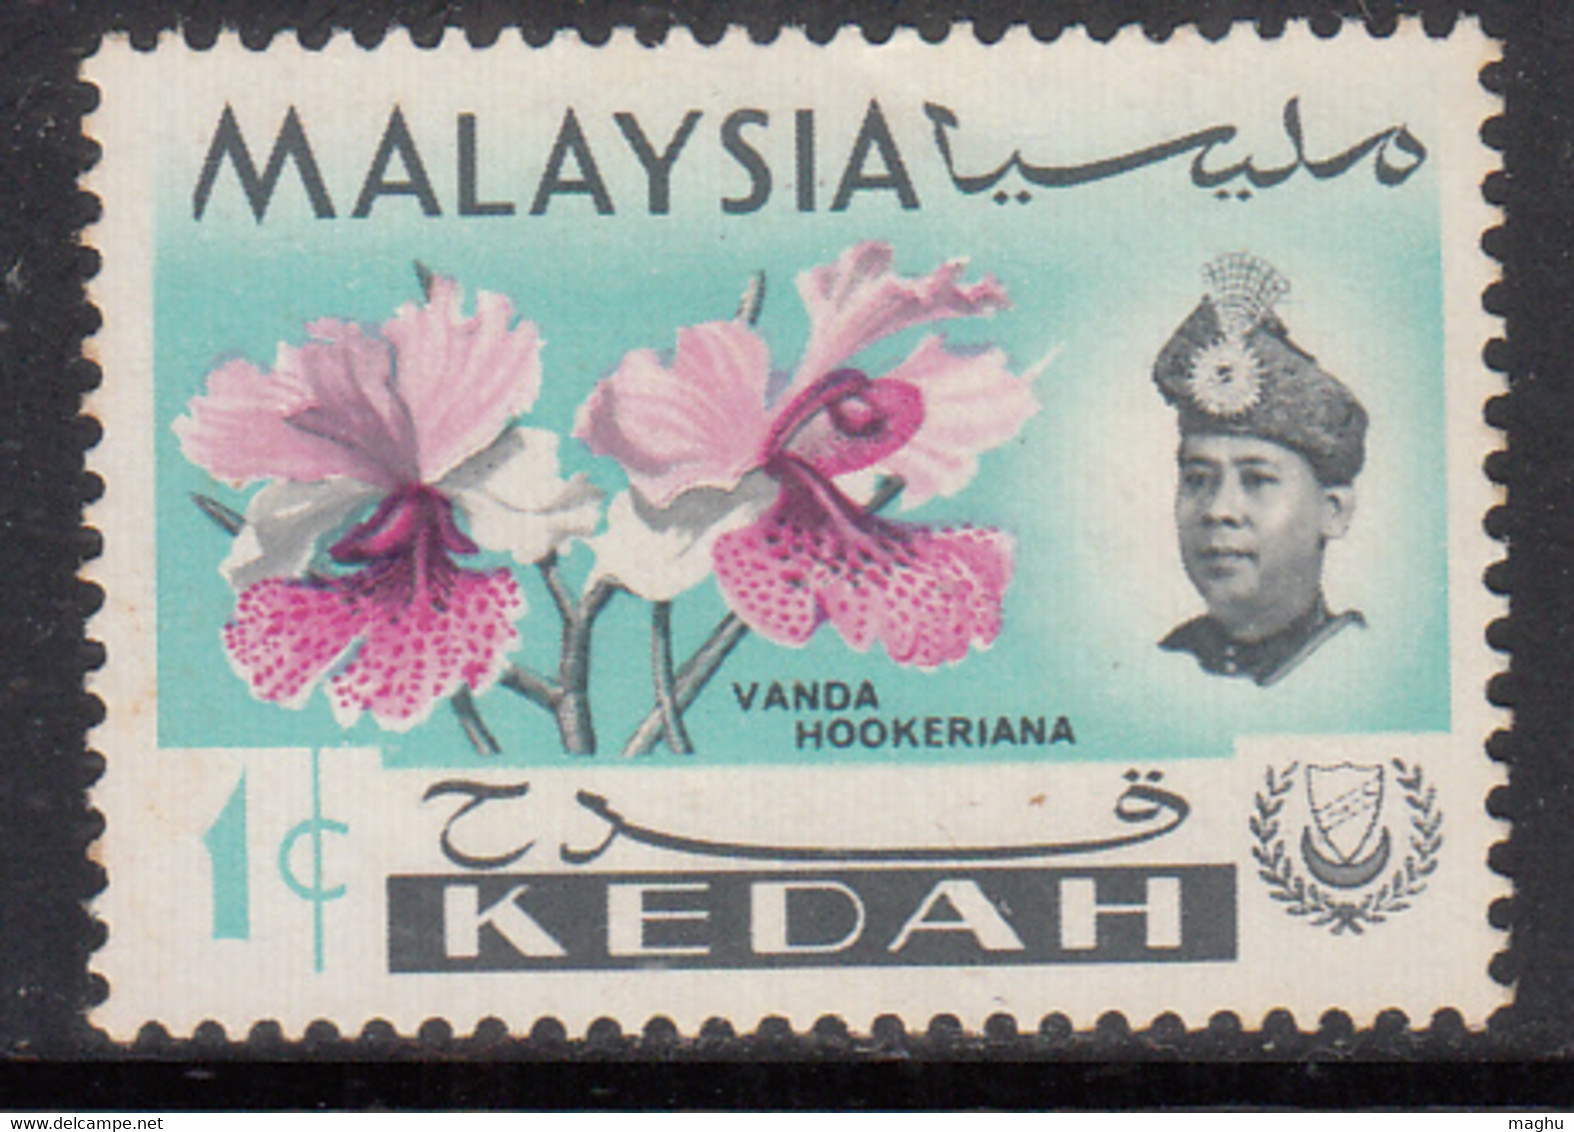 1c Kedah Used 1965, Flower, Plant, Malaya - Kedah